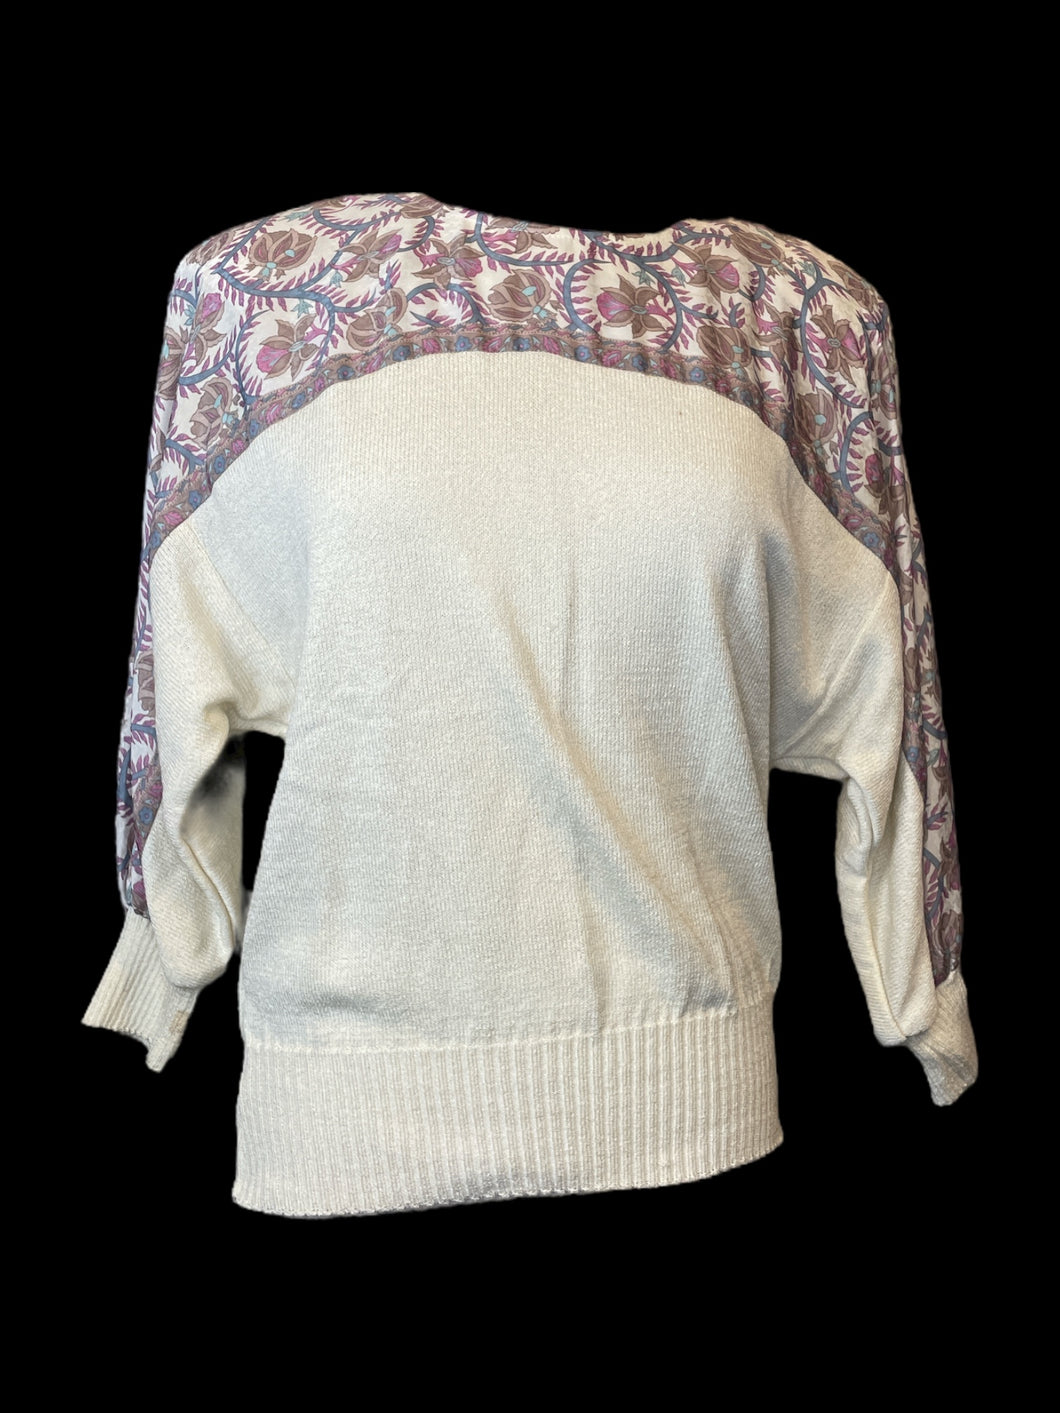 L Vintage 80s off-white 3/4 sleeve scoop neck knit sweater w/ ornate floral panel, shoulder pads, ribbed hem, & button keyhole closure